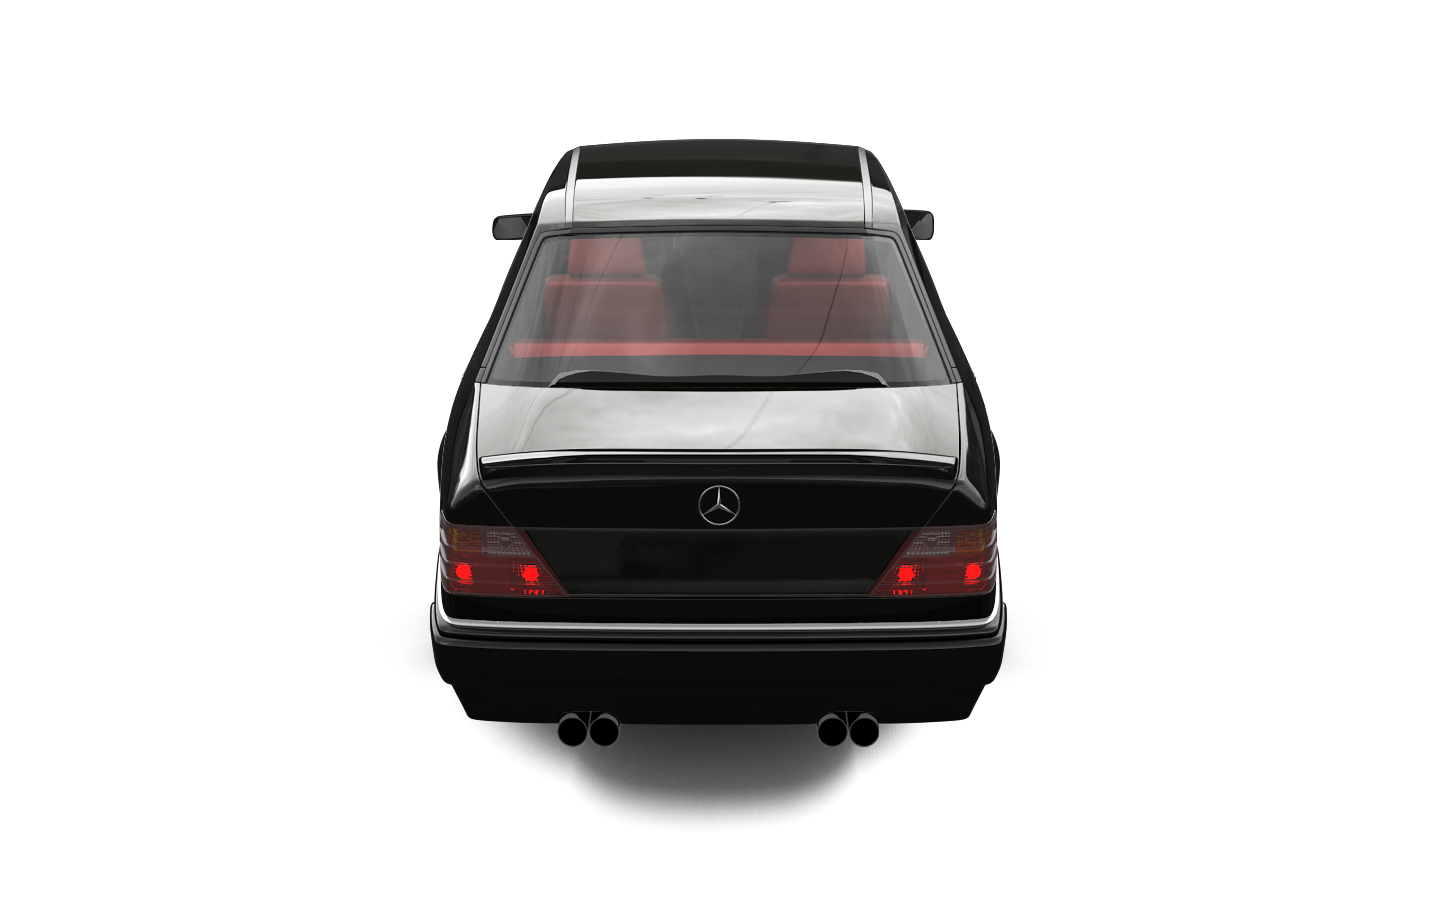 Mercedes E-Class Sedan 1984